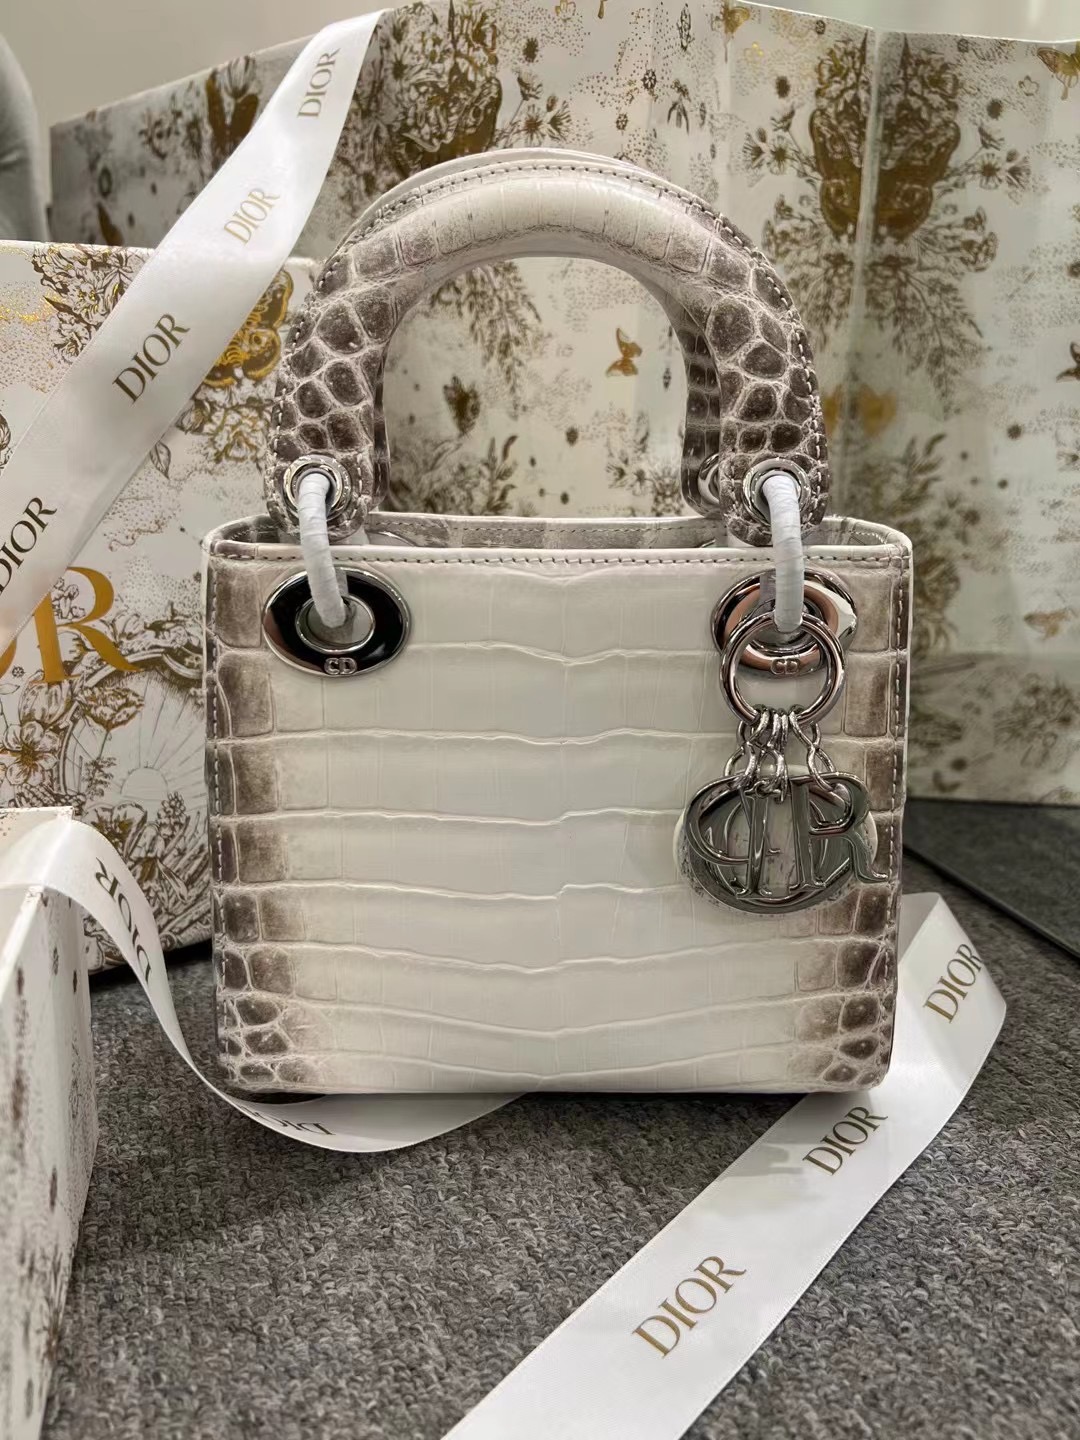 Lady Dior Crocodile small Bag  Handbag Spa  Shop